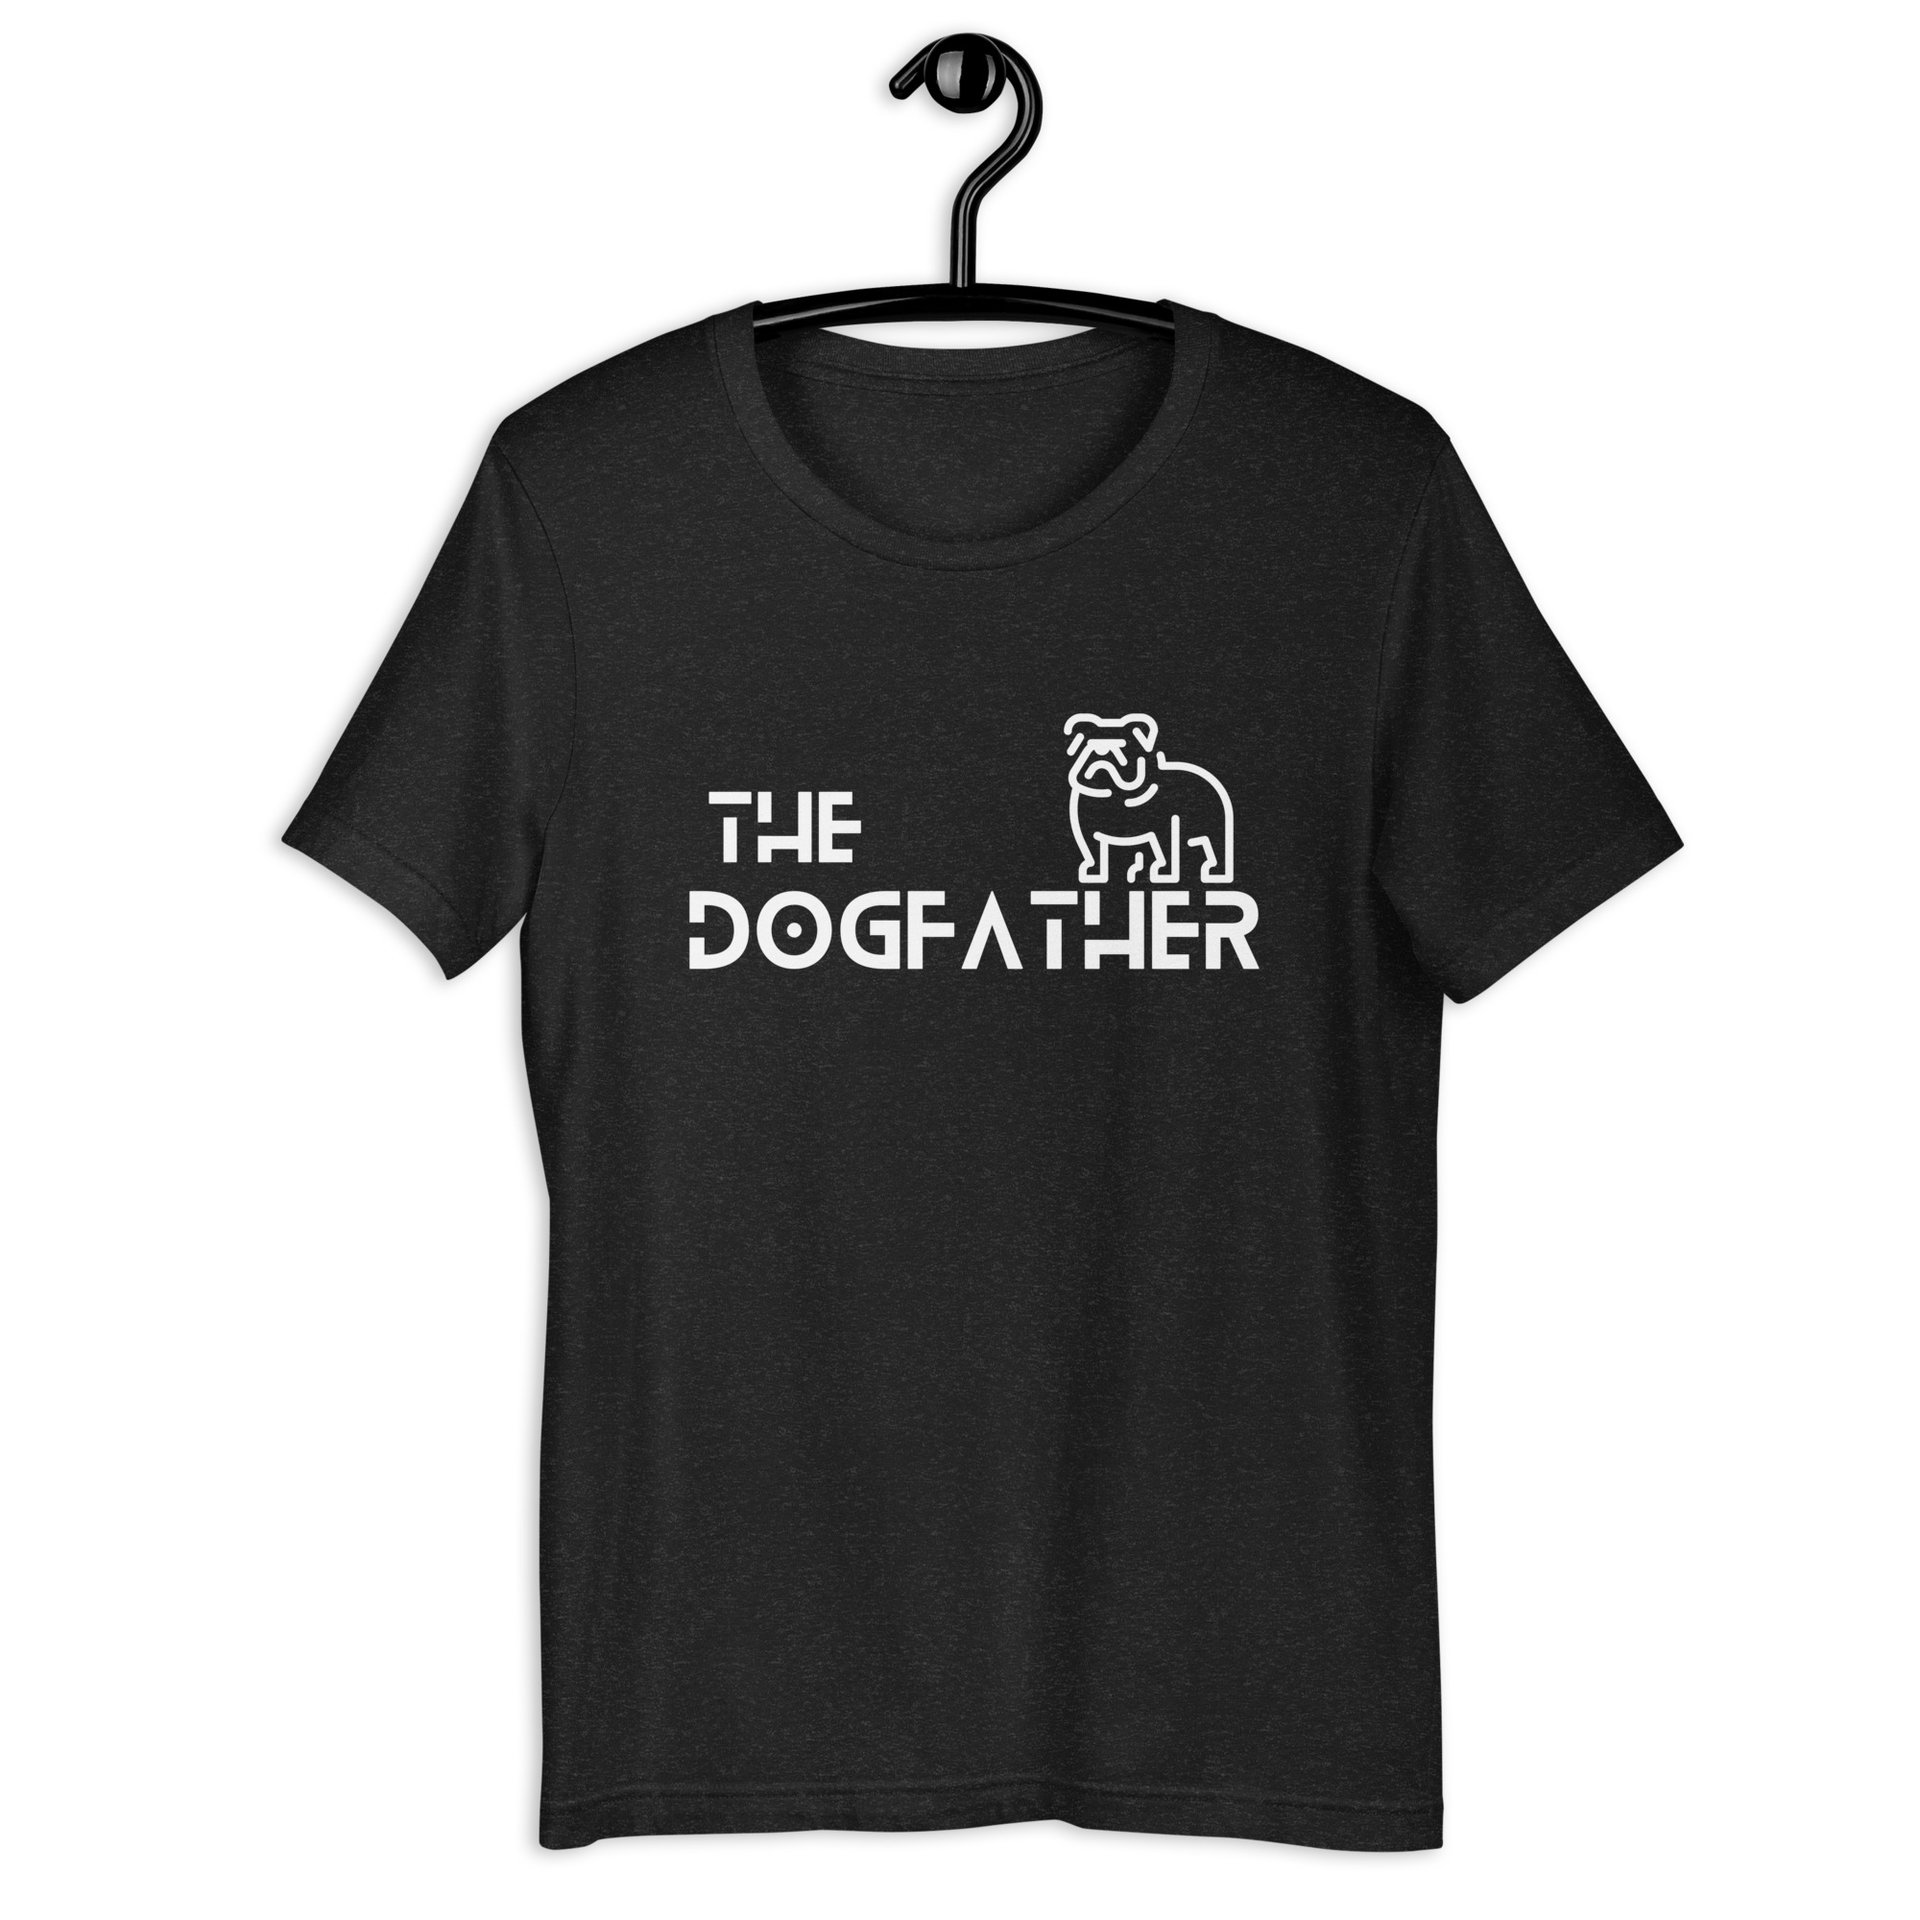 The Dogfather Bulldog Unisex T-Shirt. Black Heather